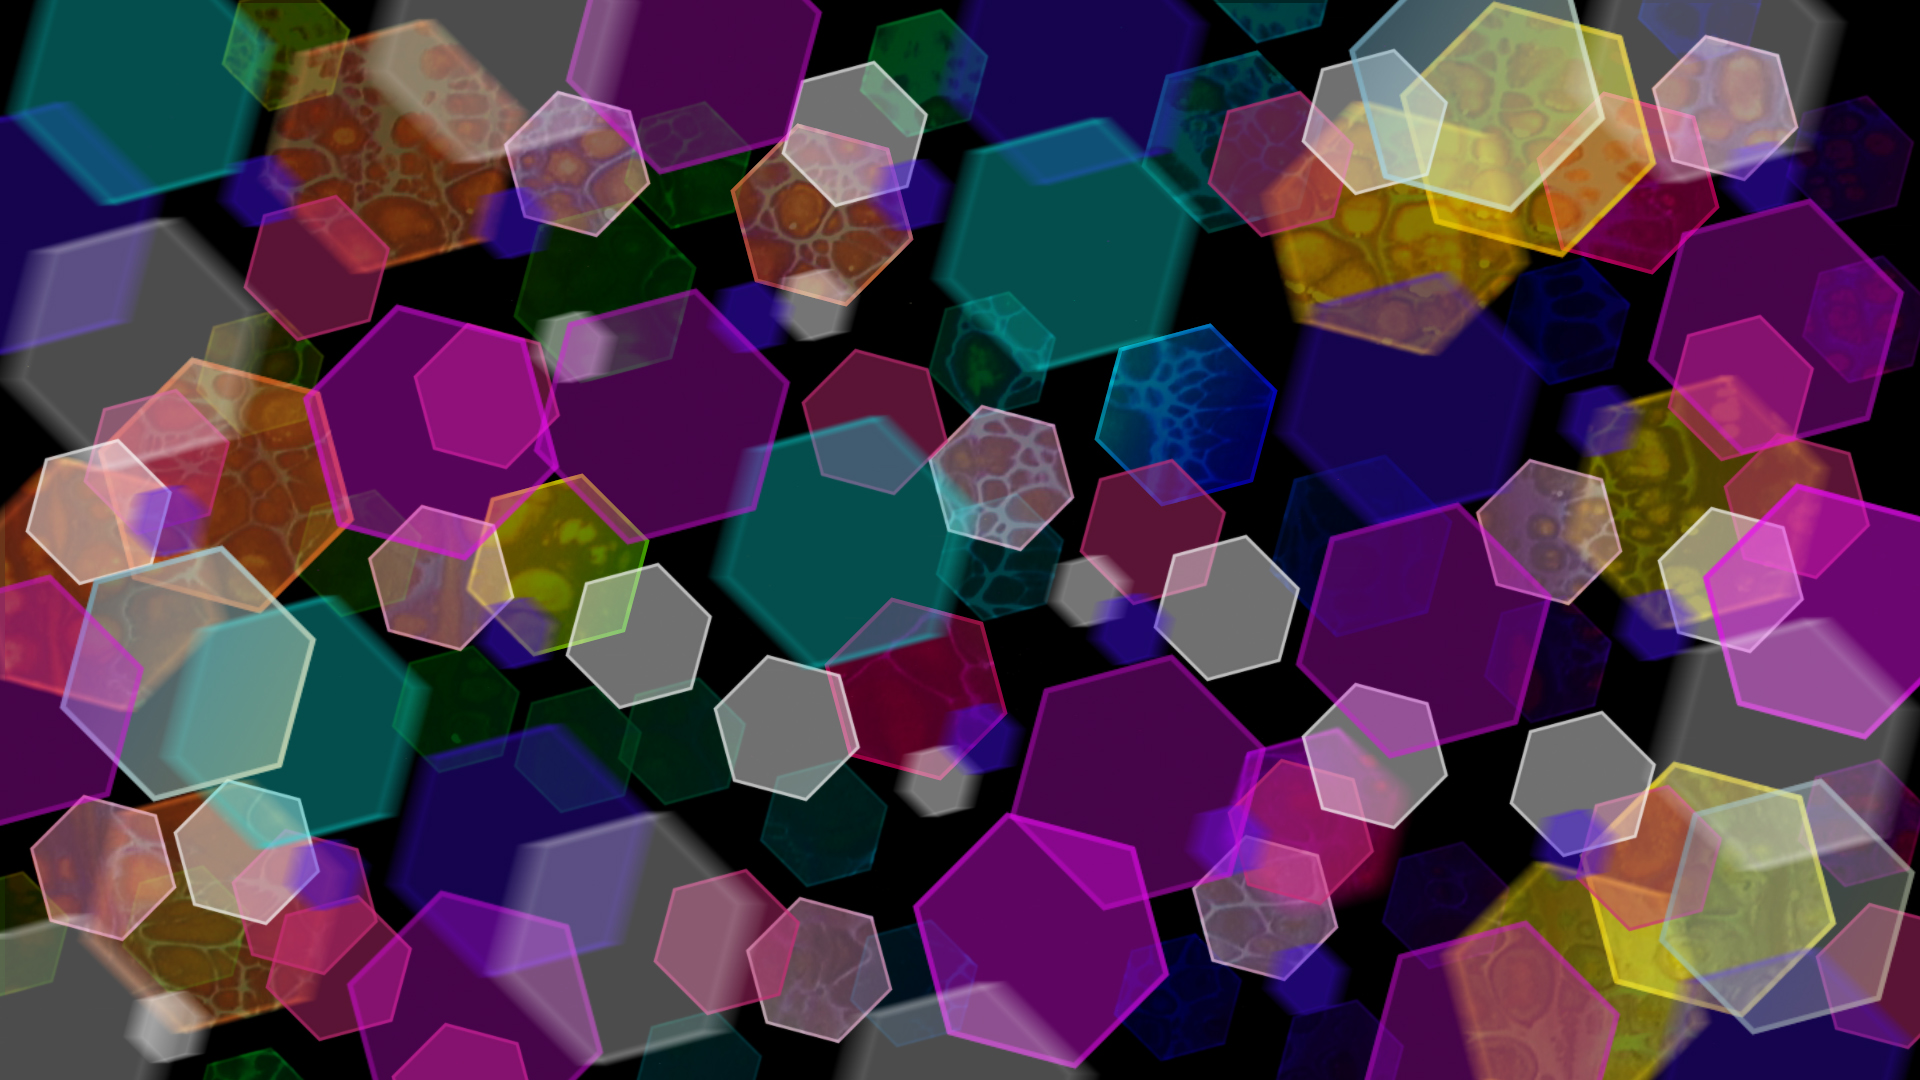 Abstract Artistic Colors Digital Art Hexagon 1920x1080